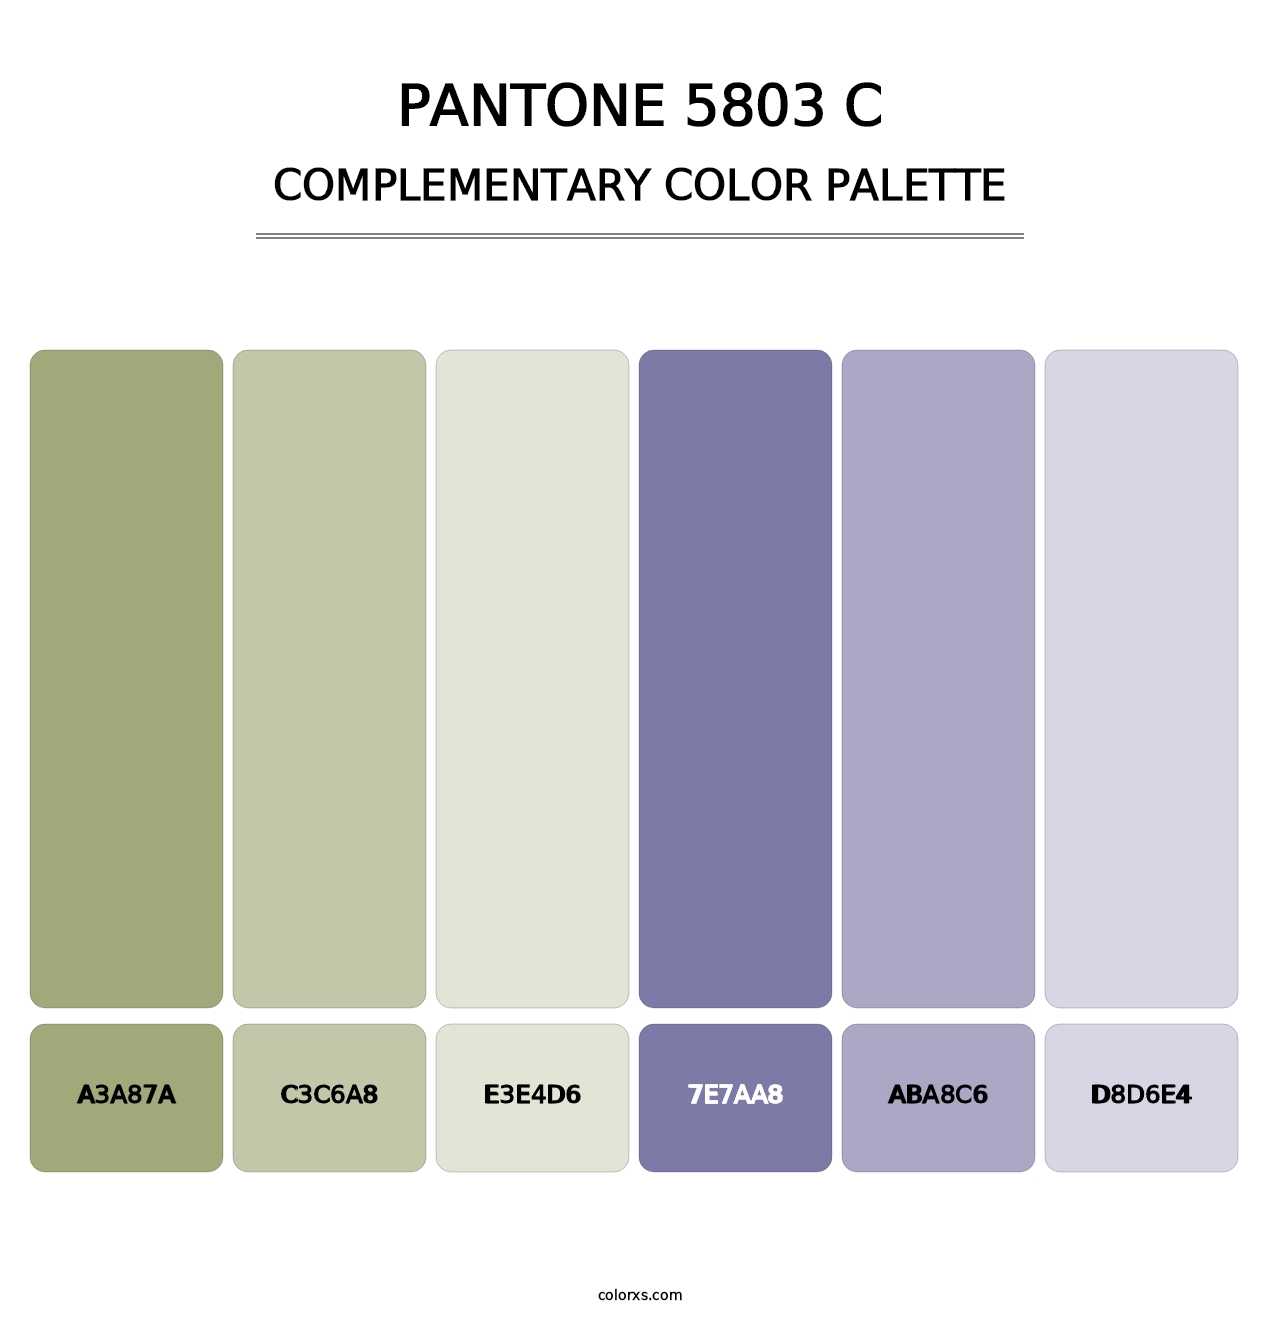 PANTONE 5803 C - Complementary Color Palette